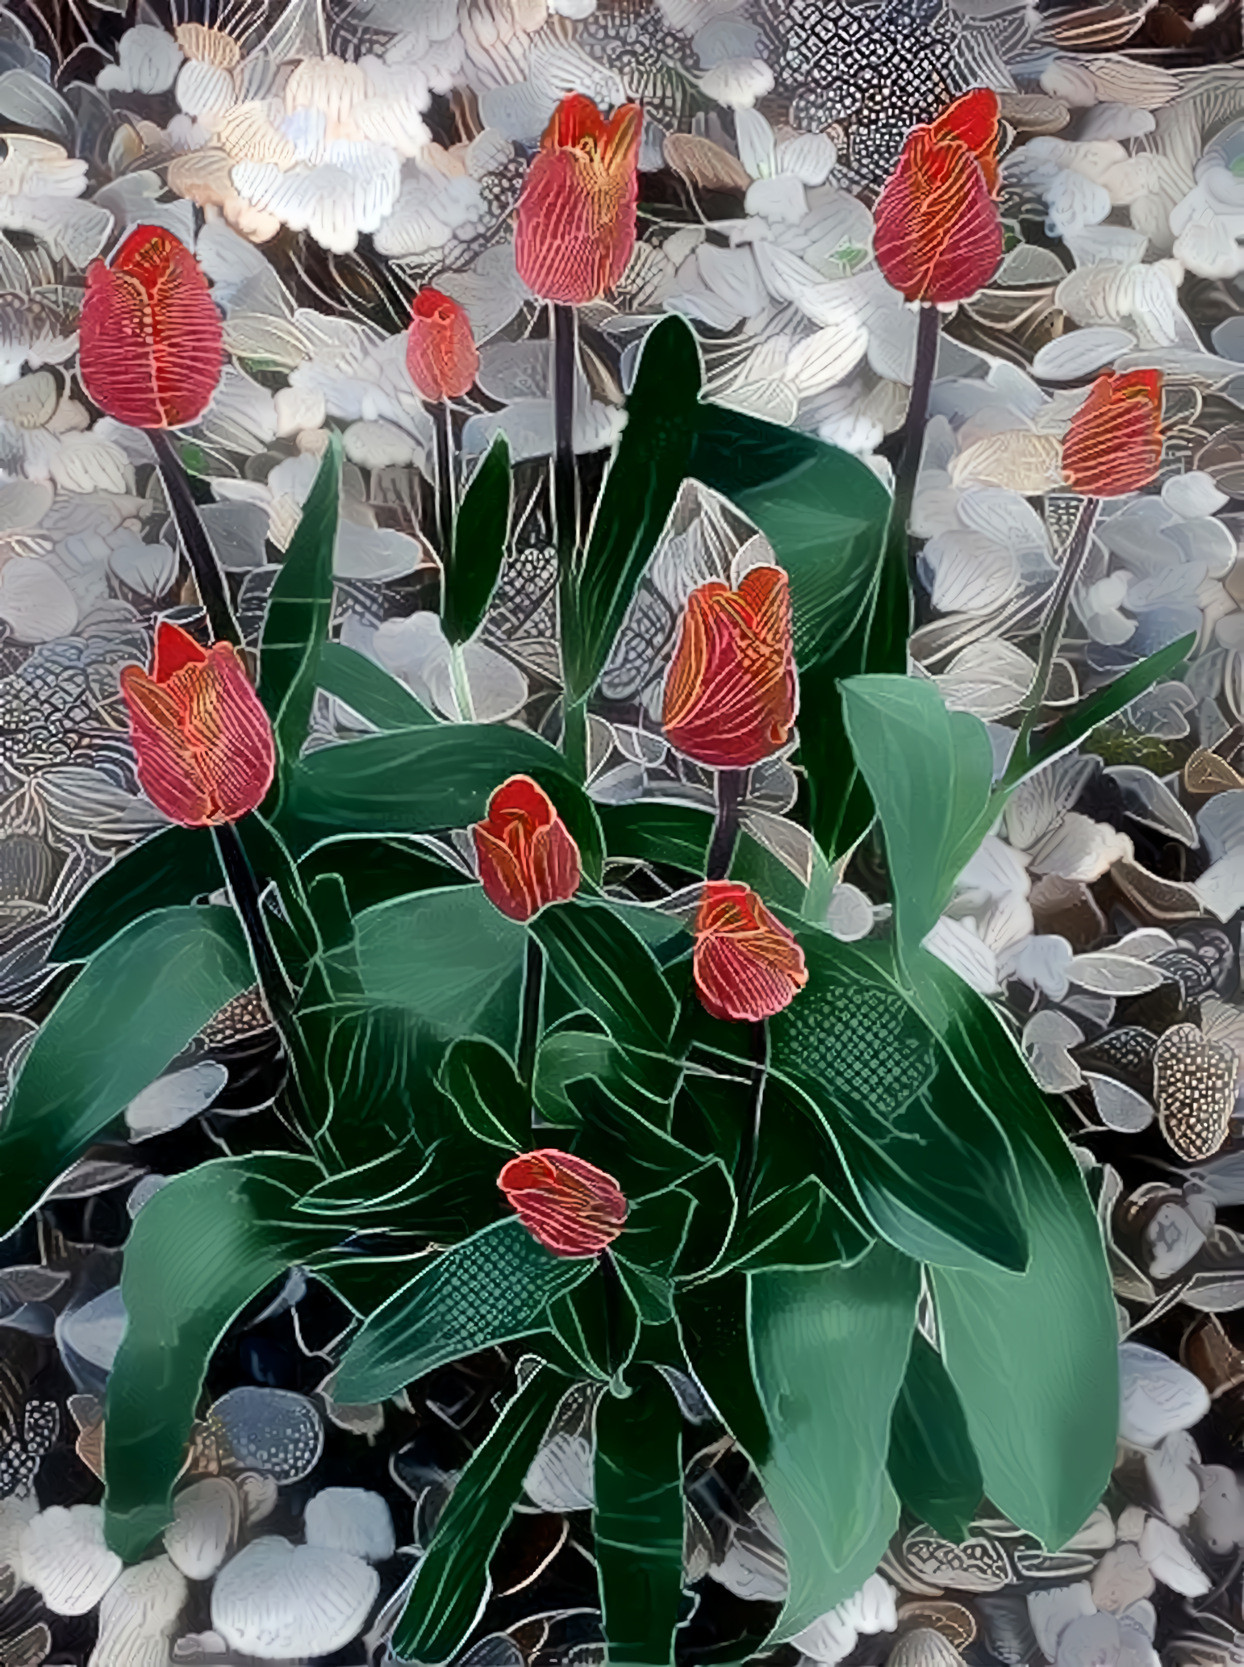 Rick's Tulips